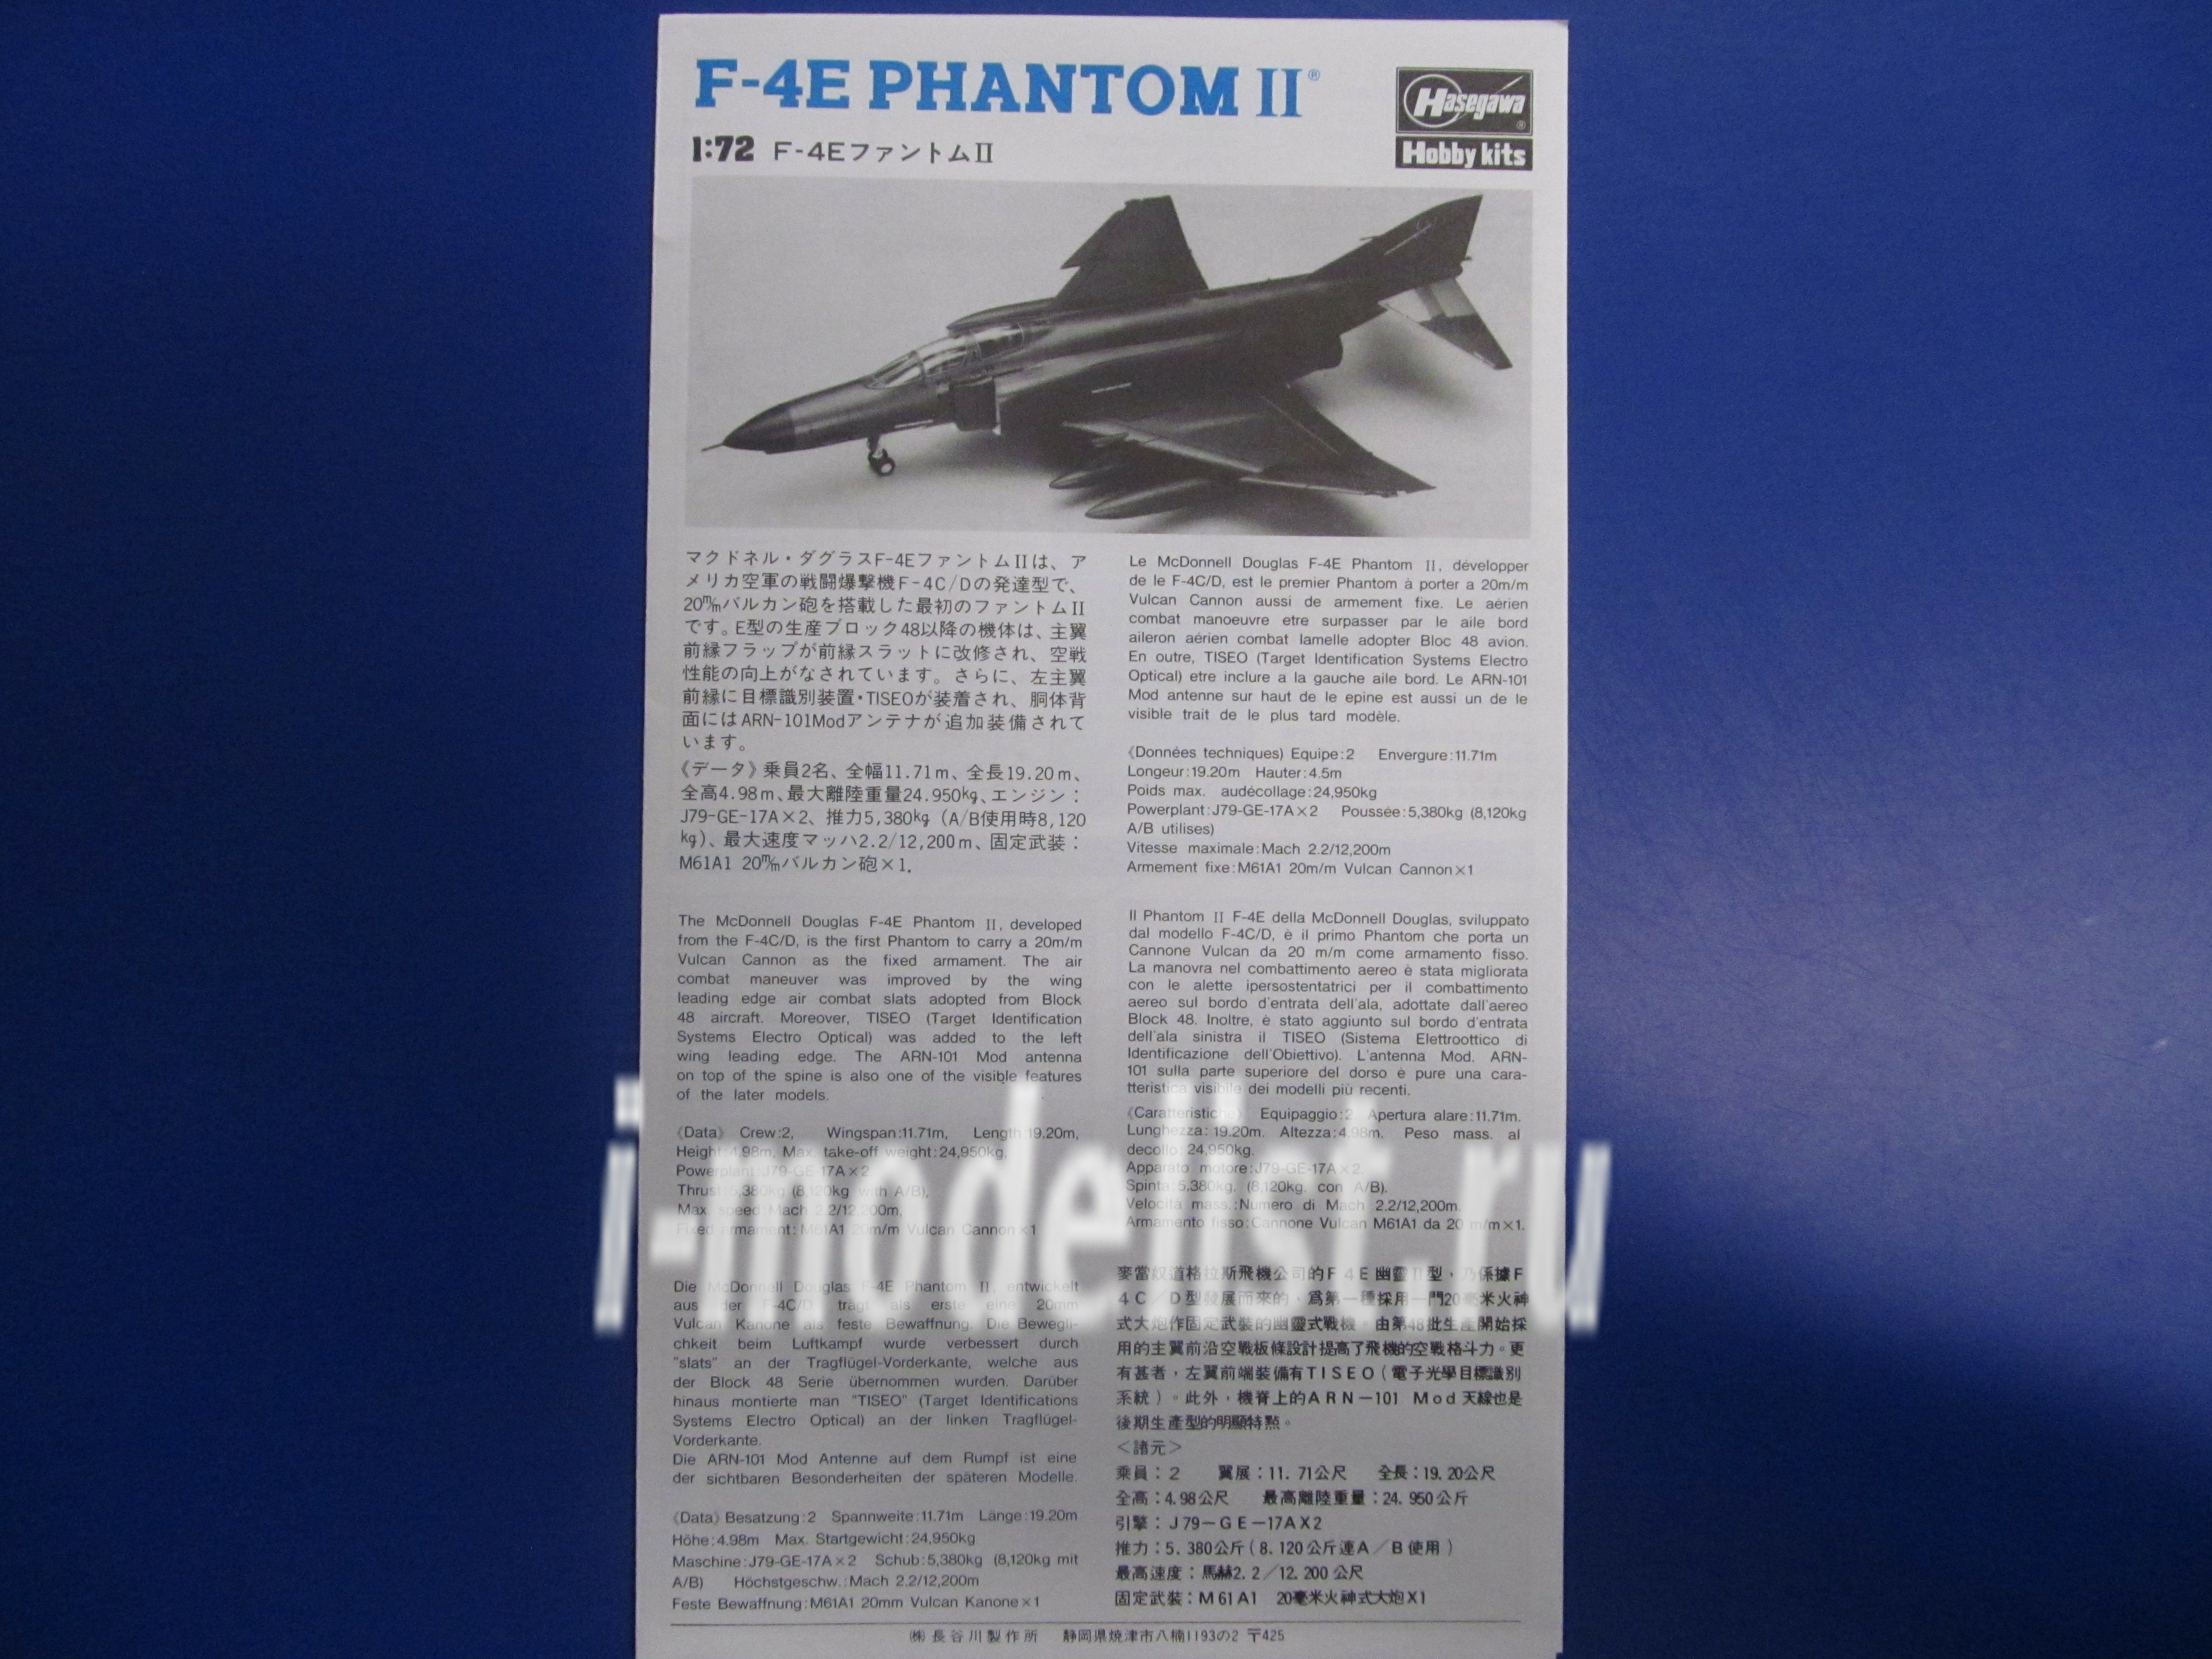 00332 Hasegawa 1/72 F-4E Phantom II